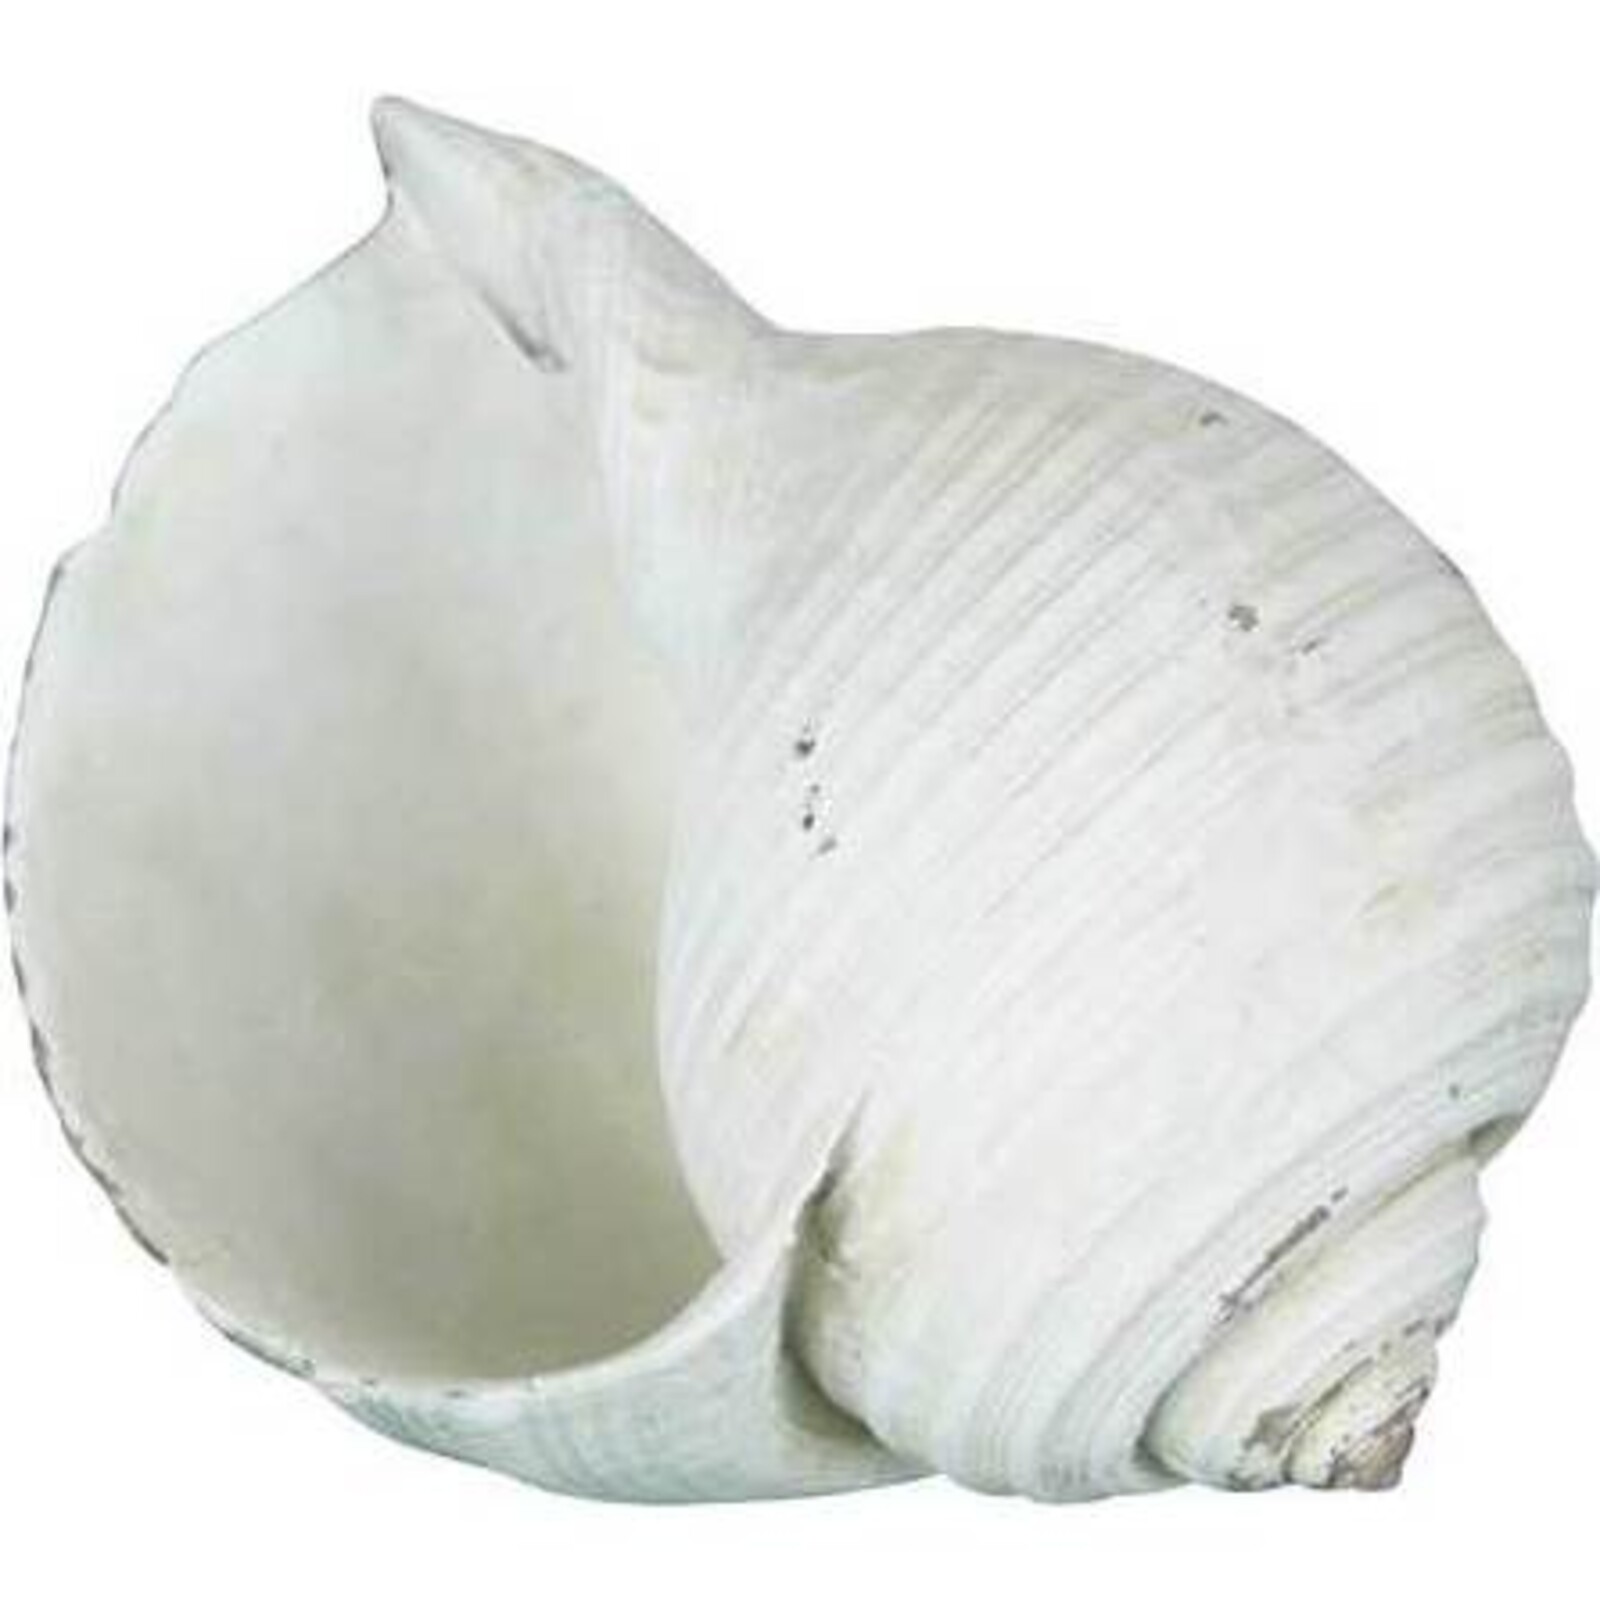 Décor Shell Conch